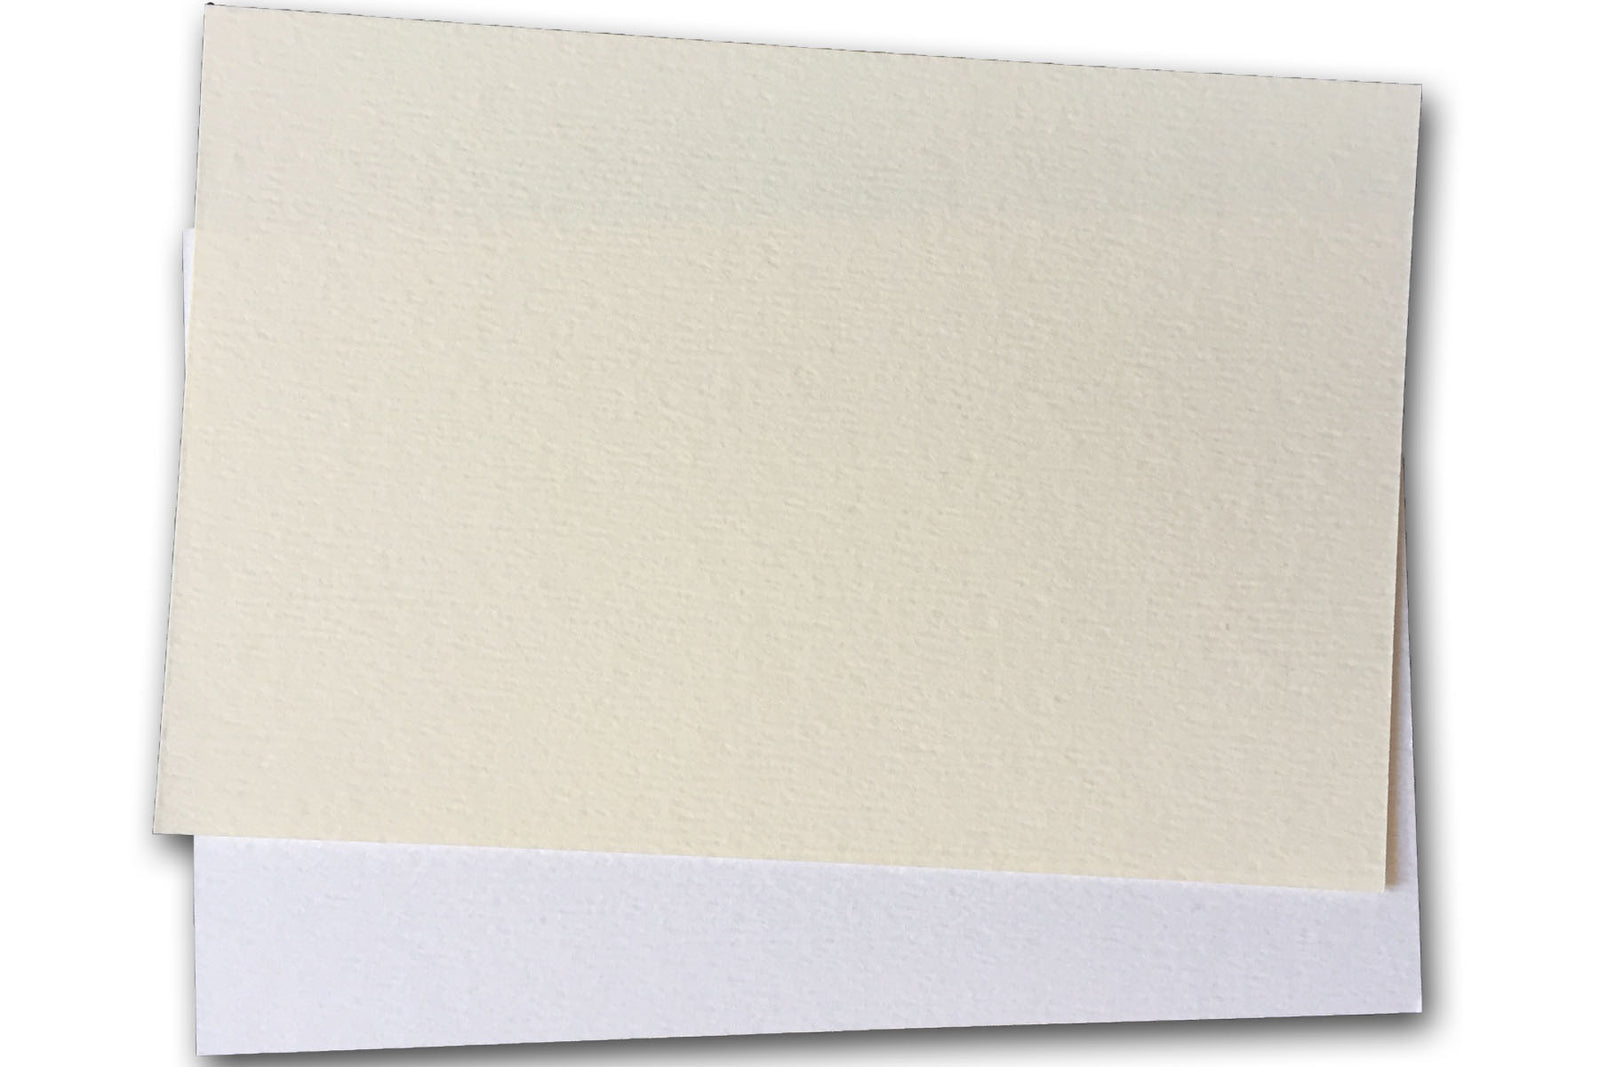 Strathmore Pastelle DECKLE EDGE 80 lb Text Weight Paper 8.5x11 - 50 pk